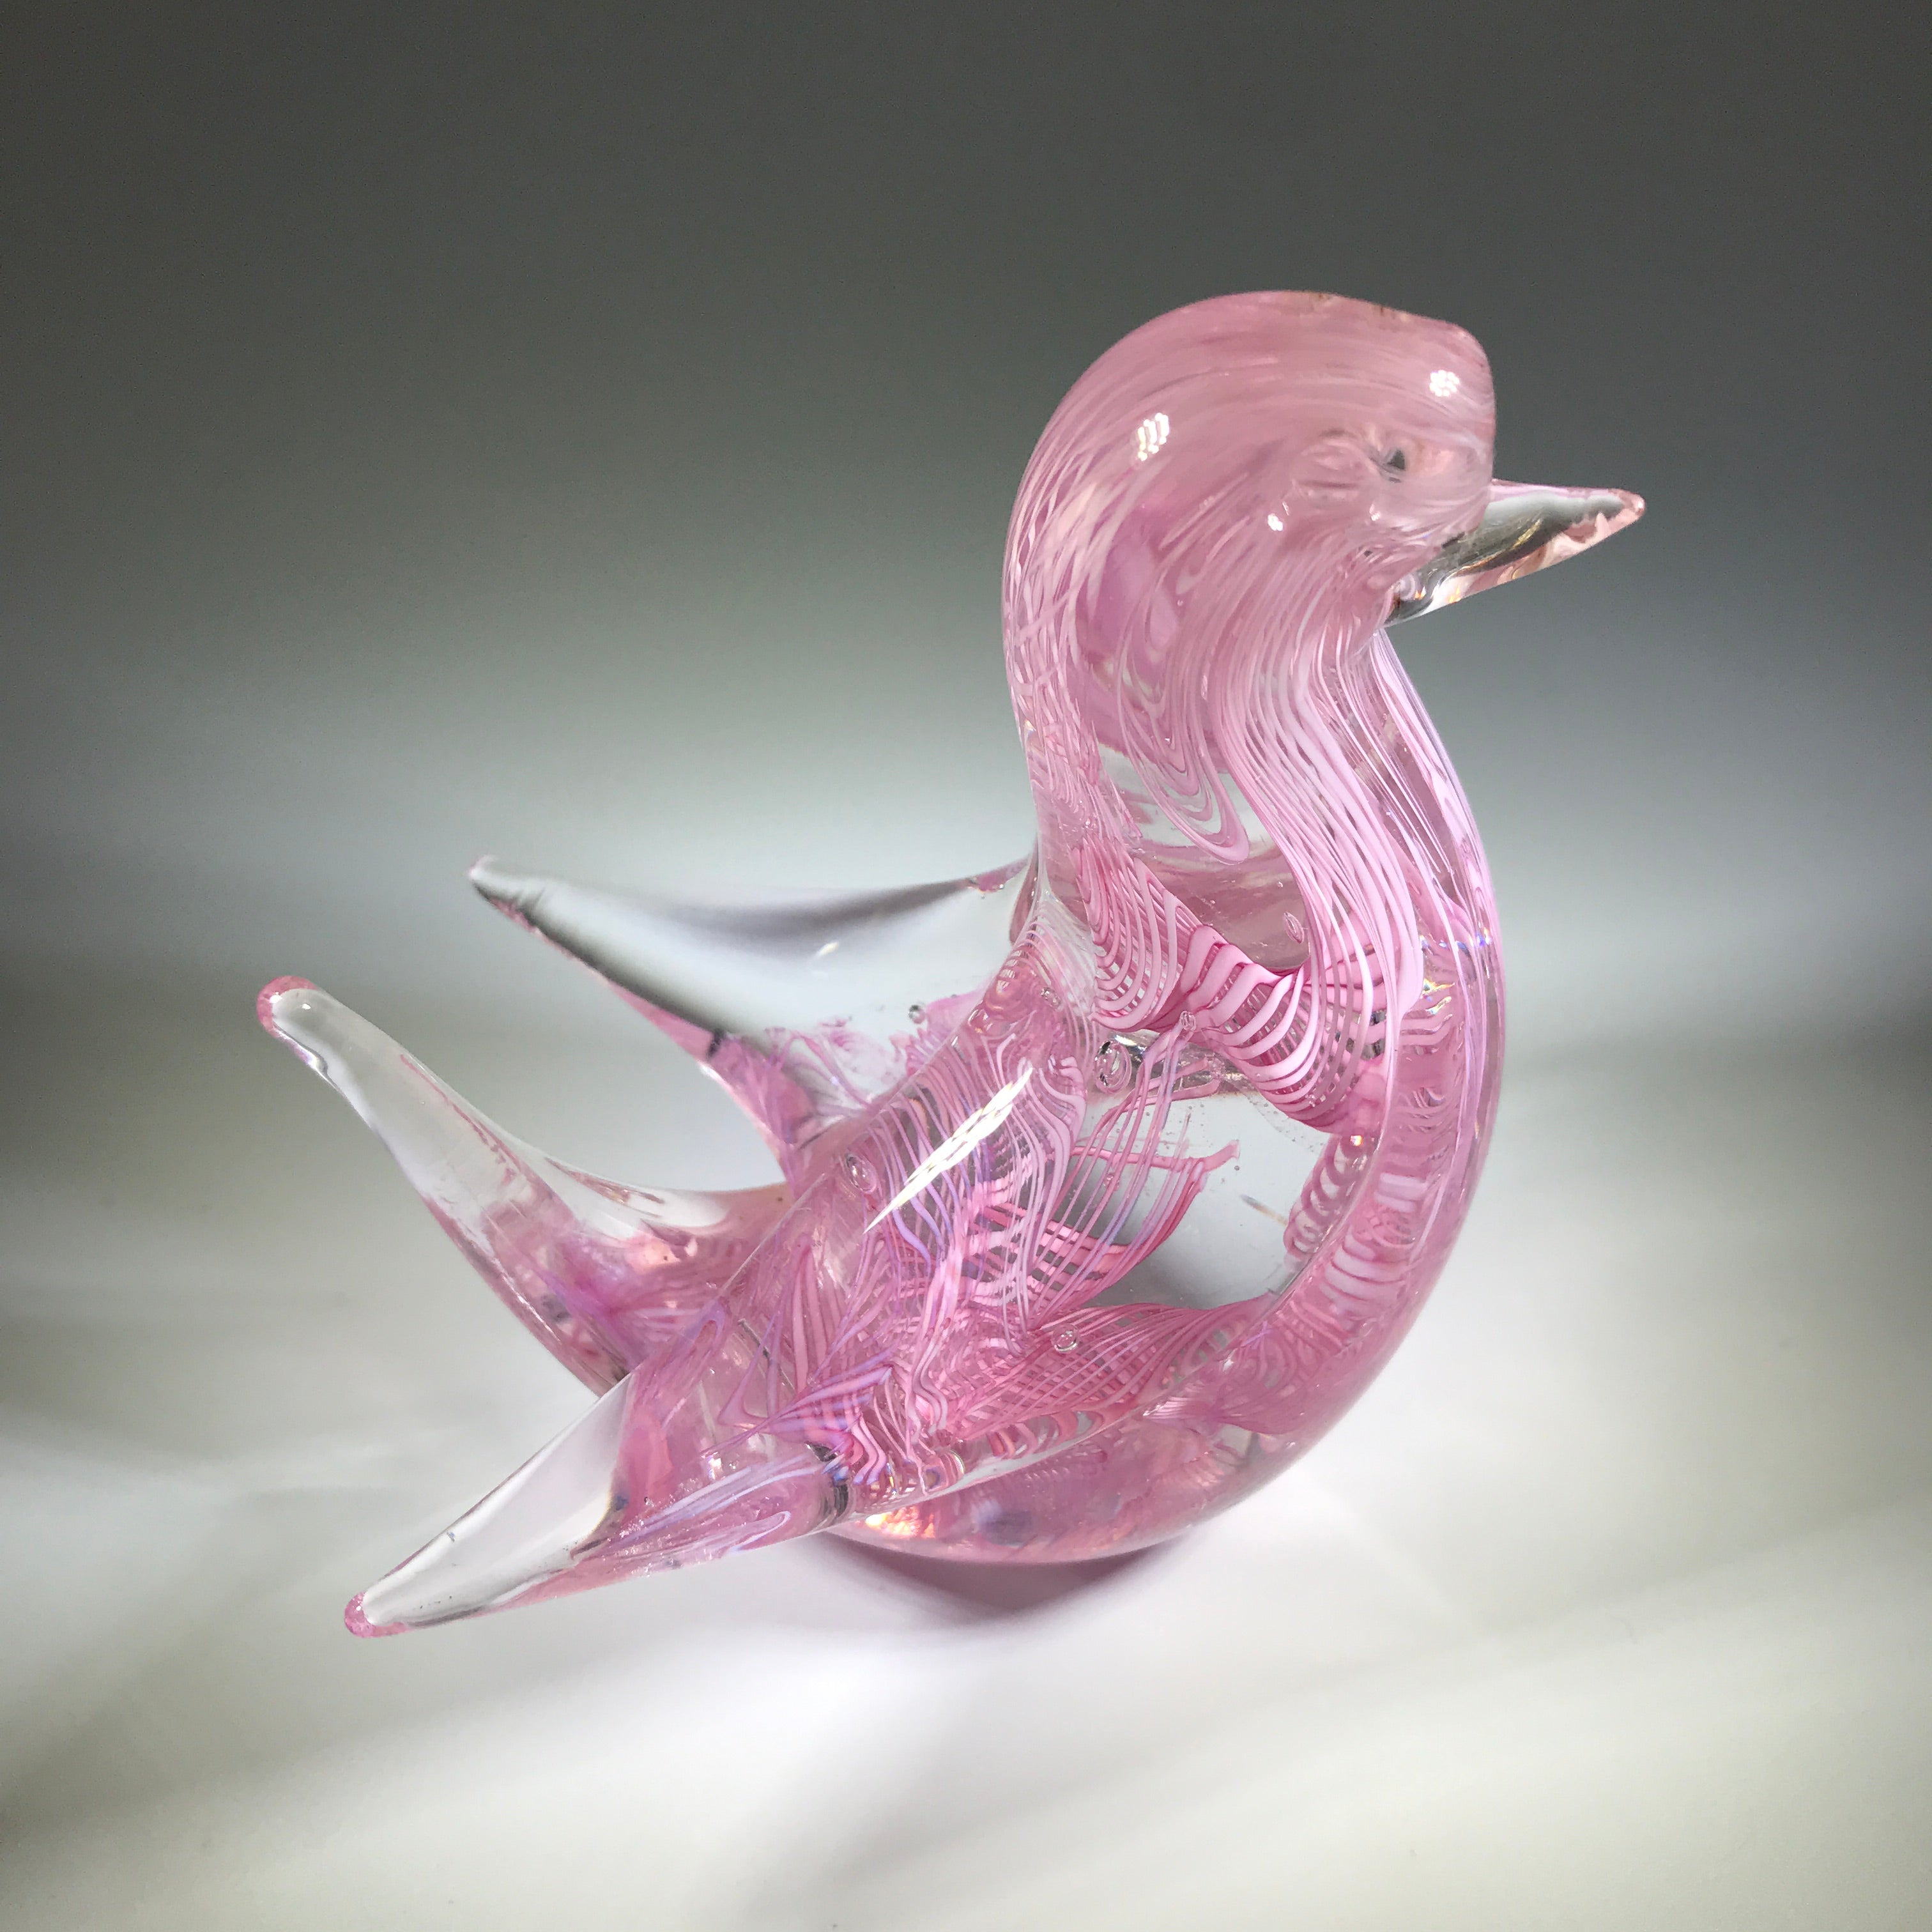 Vintage Murano Figural Art Glass Bird Paperweight Sculpture with Pink